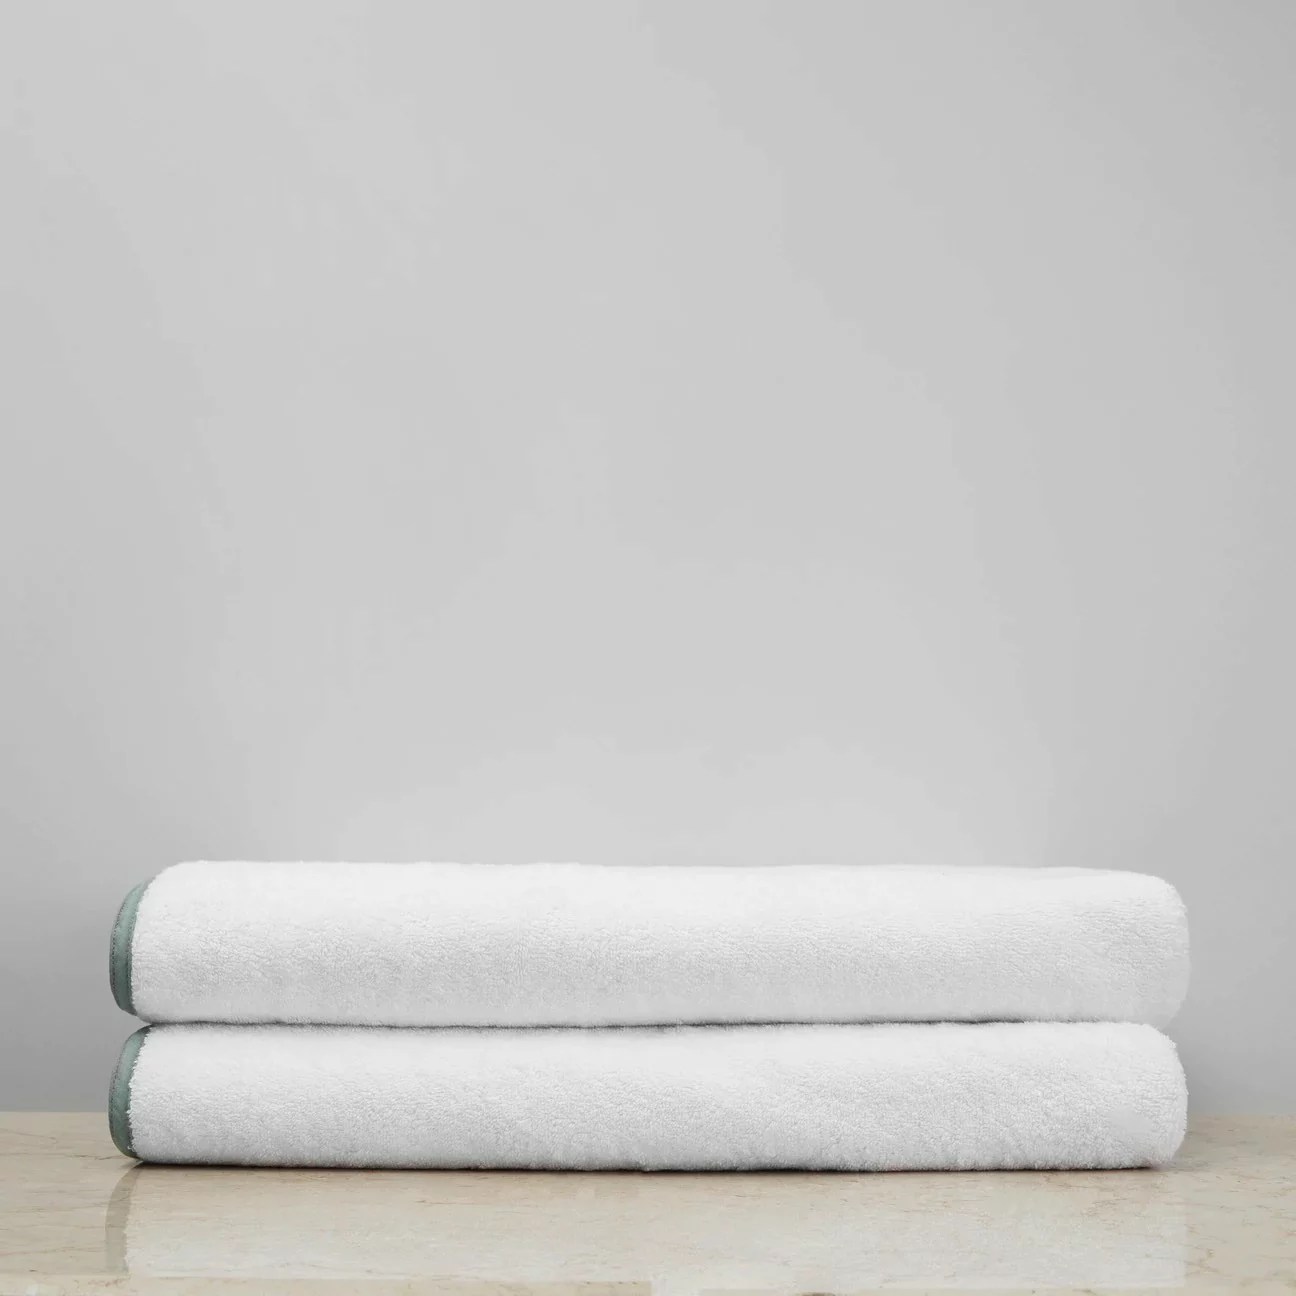 Ultralight Bath Sheets, Luxury Bath Towels